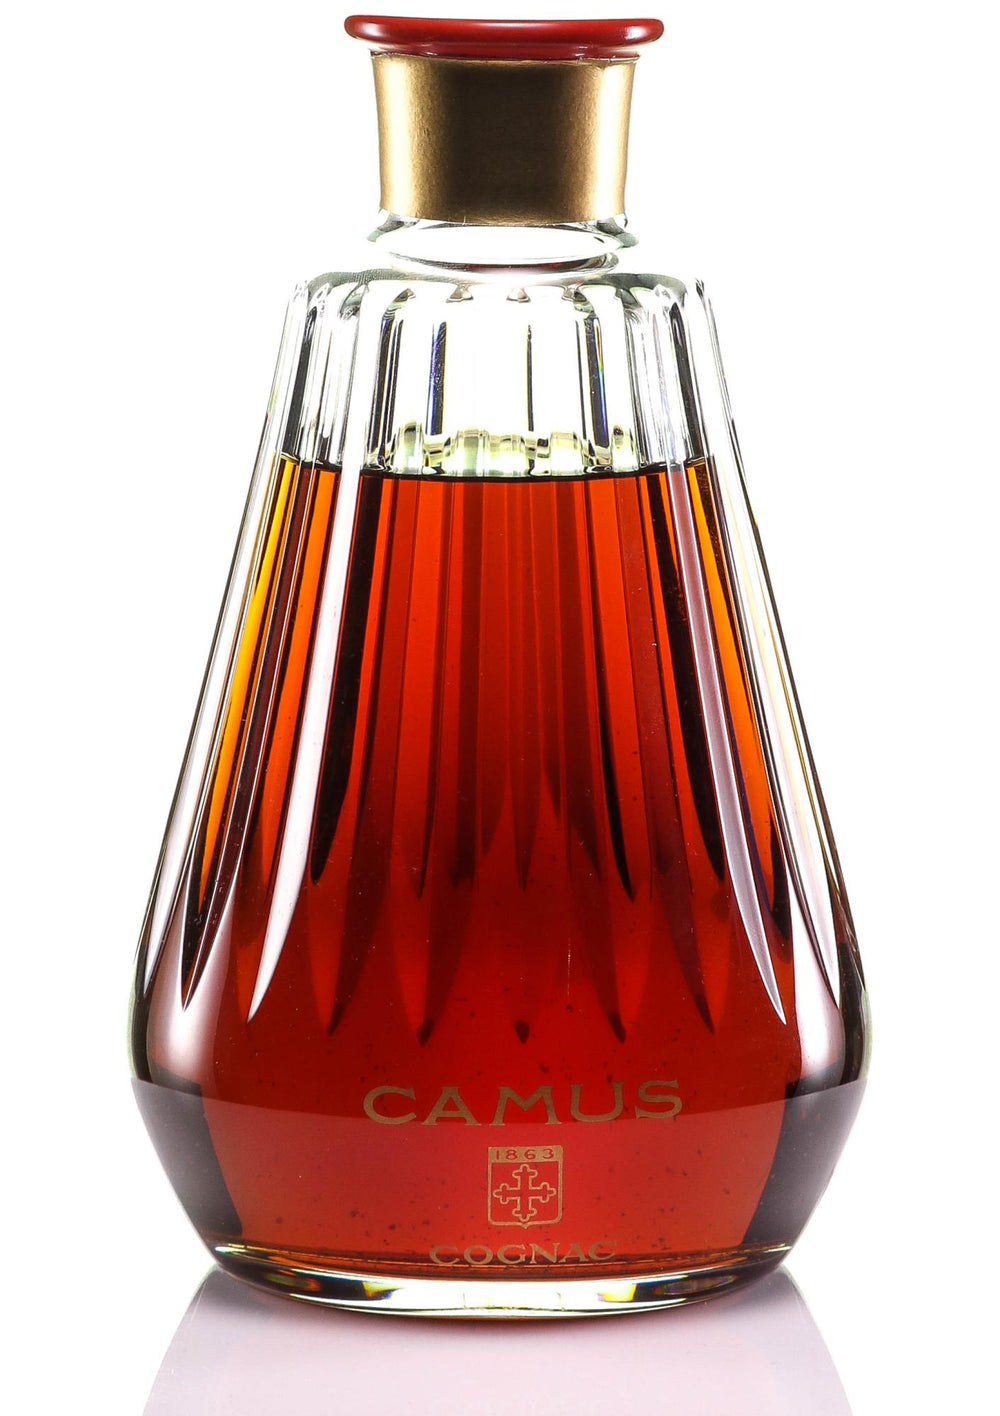 Camus & Co Cognac NV, Baccarat Carafe - Rue Pinard